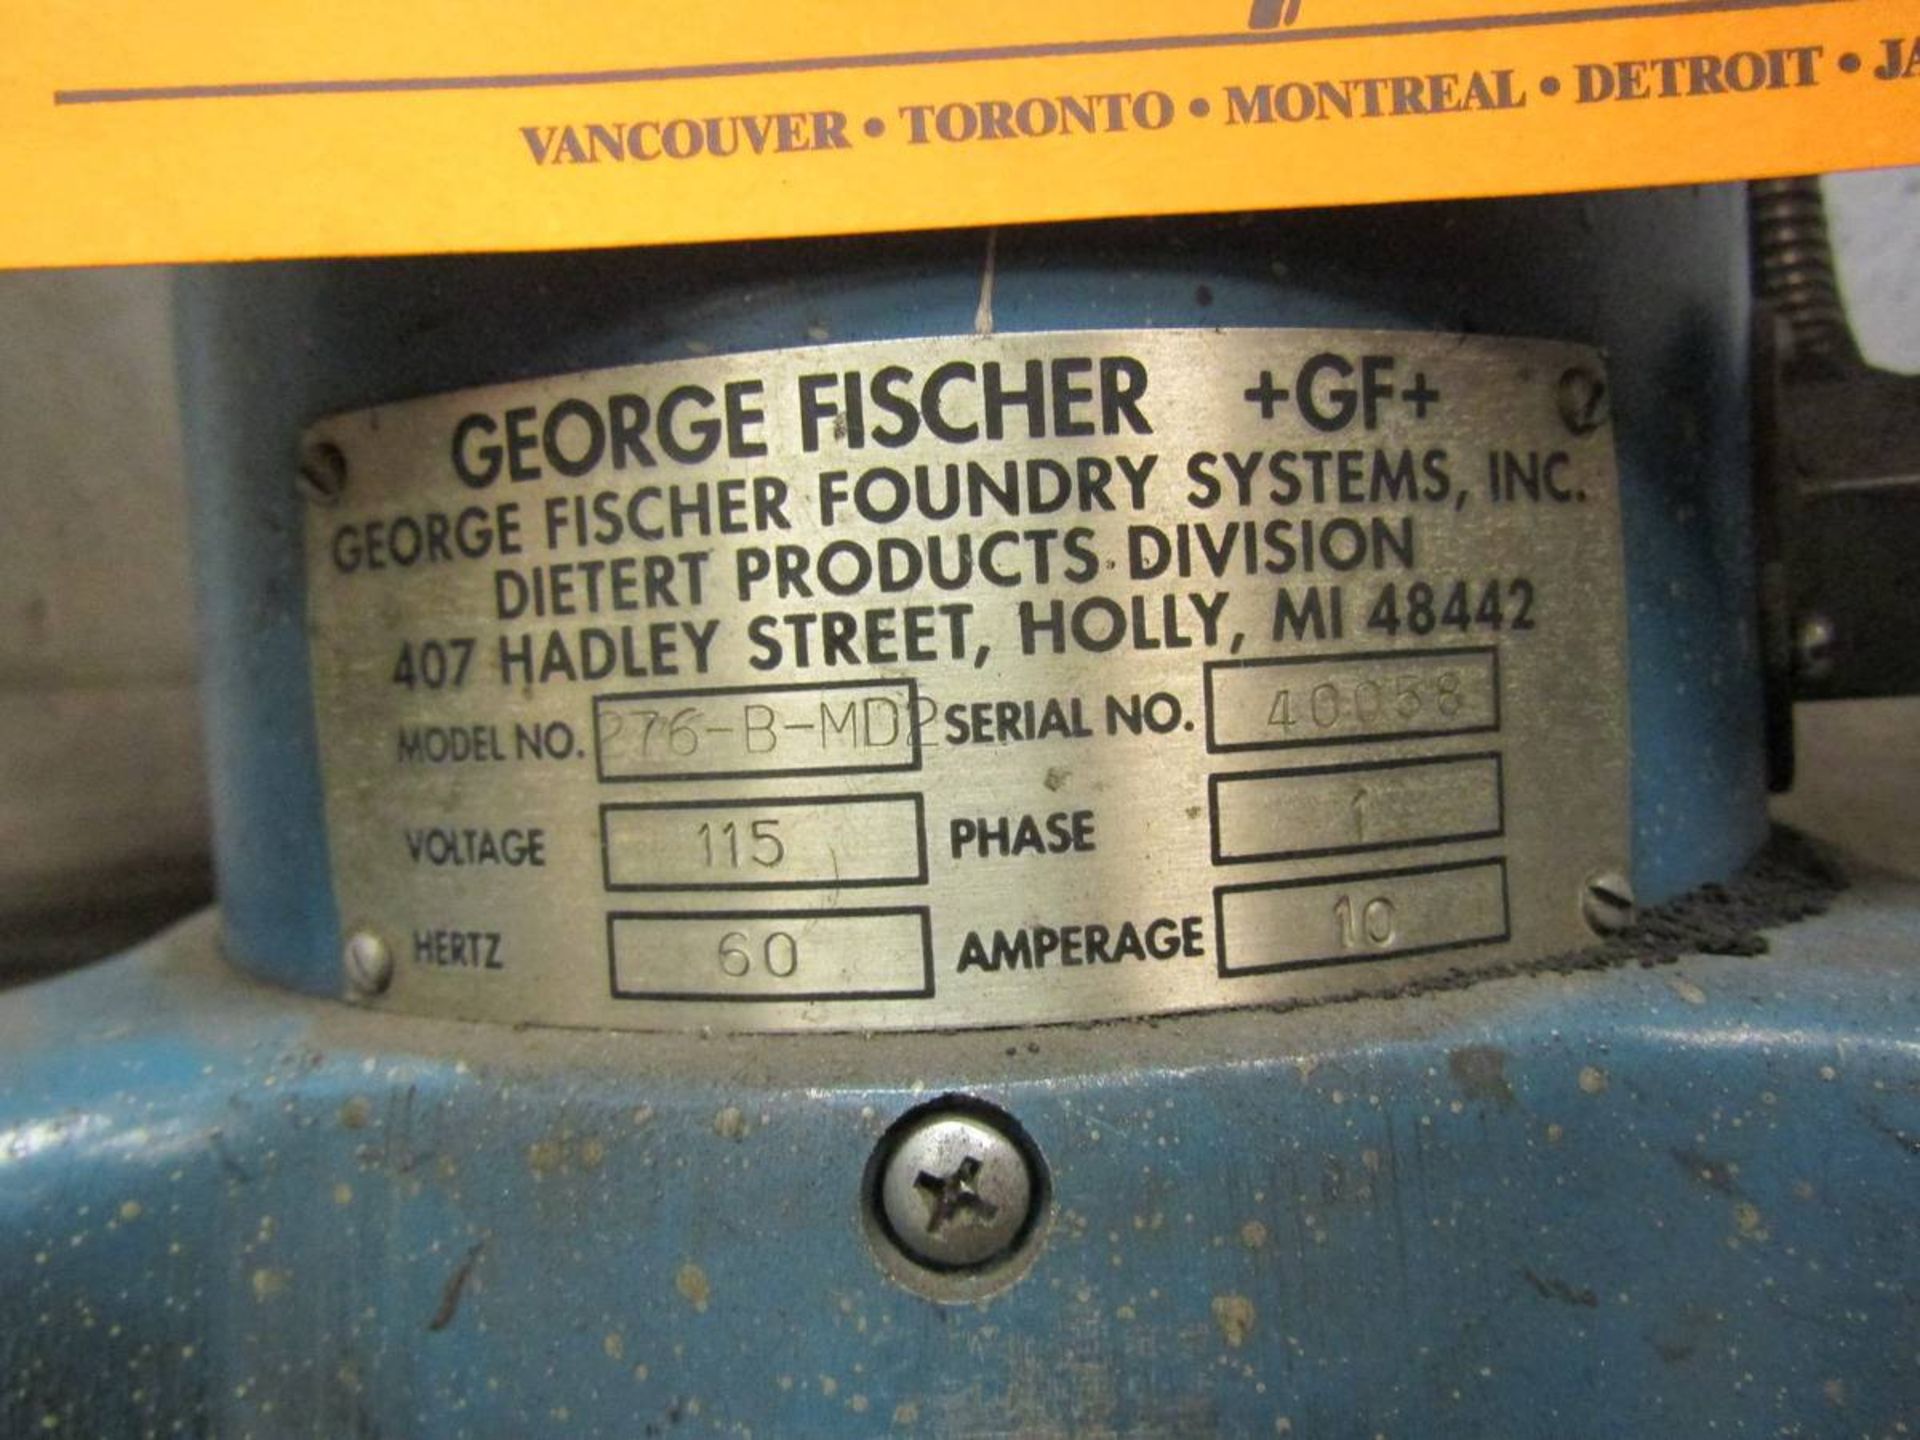 George Fisher 276-B-MD Moisture Teller - Image 2 of 2